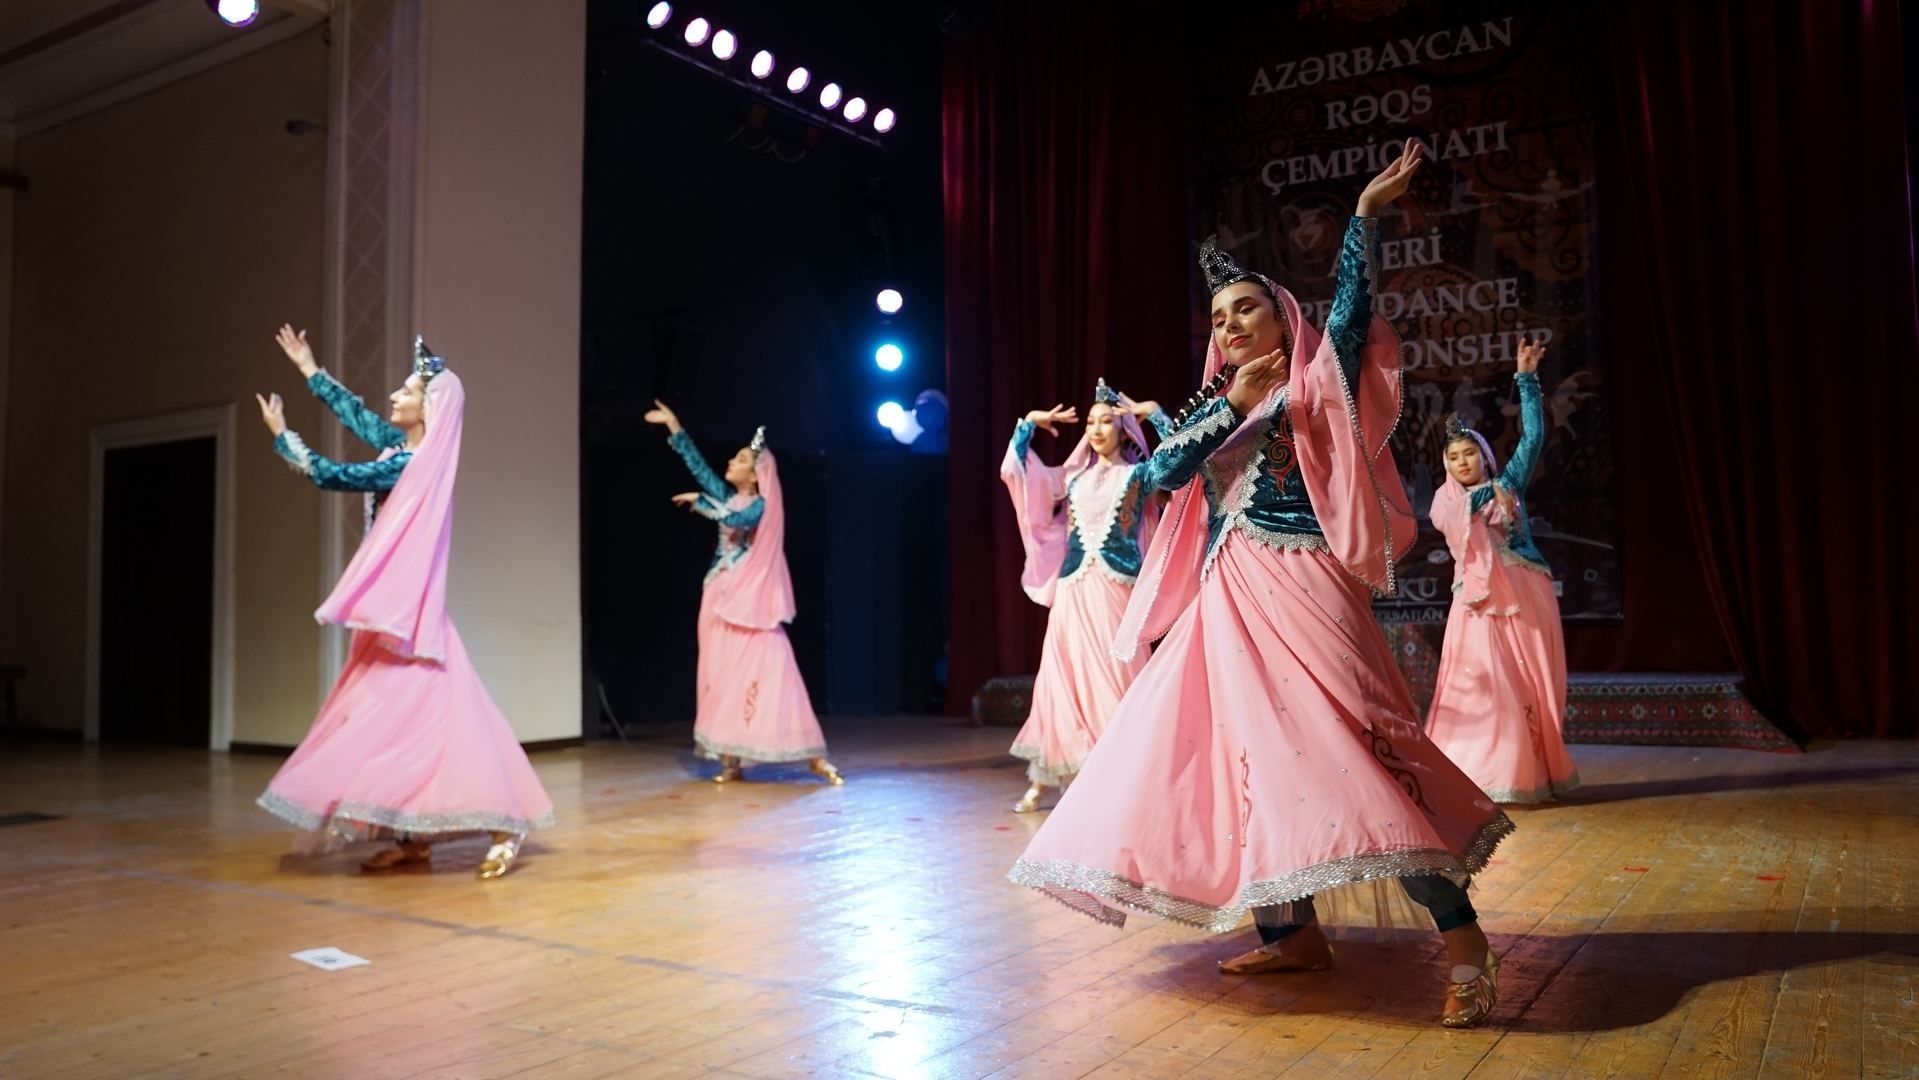 Baku to host National Dance Championship [PHOTOS] - Gallery Image